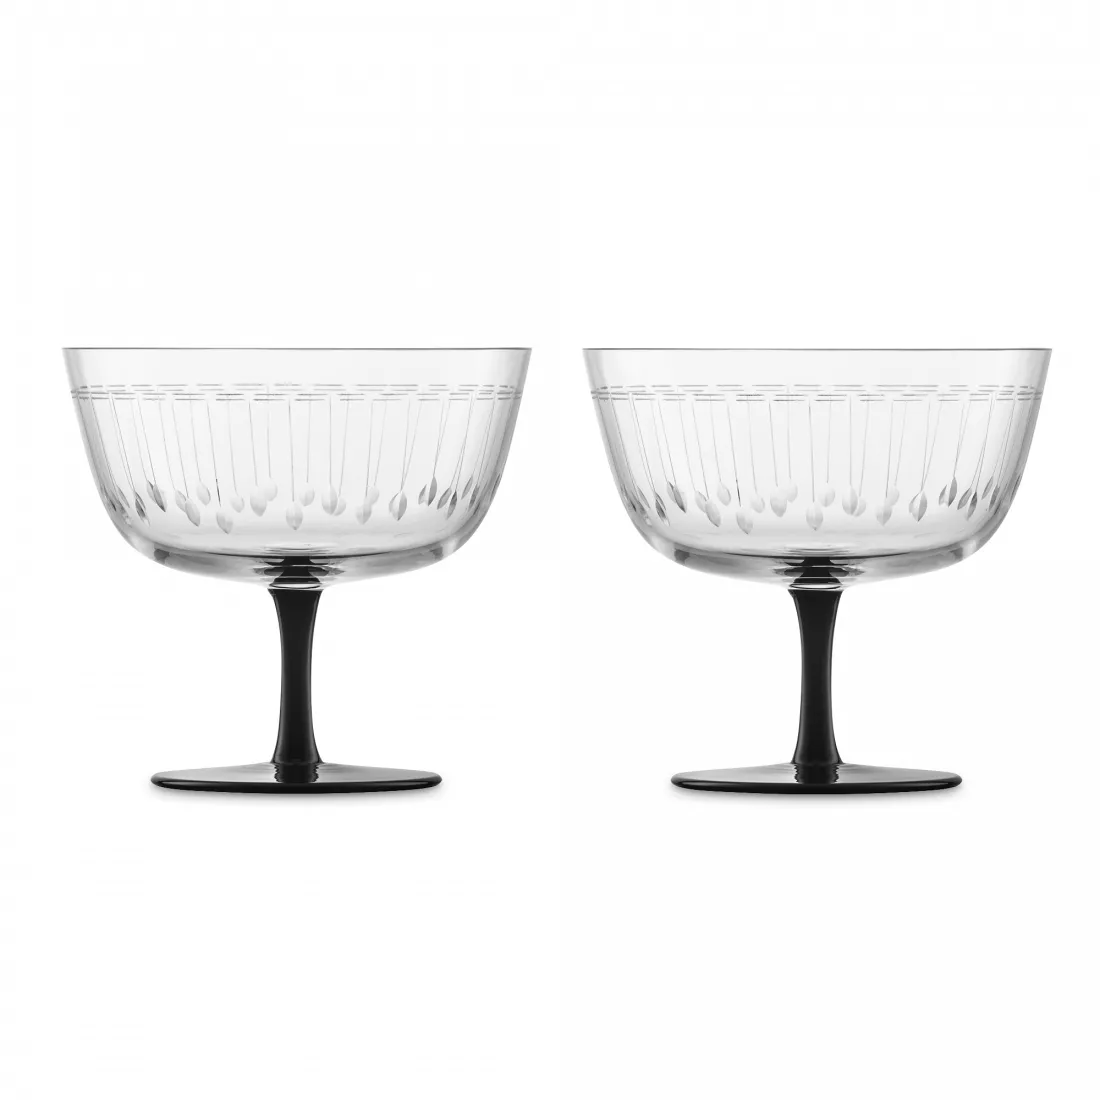 ZWIESEL GLAS Набор бокалов в форме чаши для коктейля, ручная работа, объем 260 мл, 2 шт., серия Glamorous